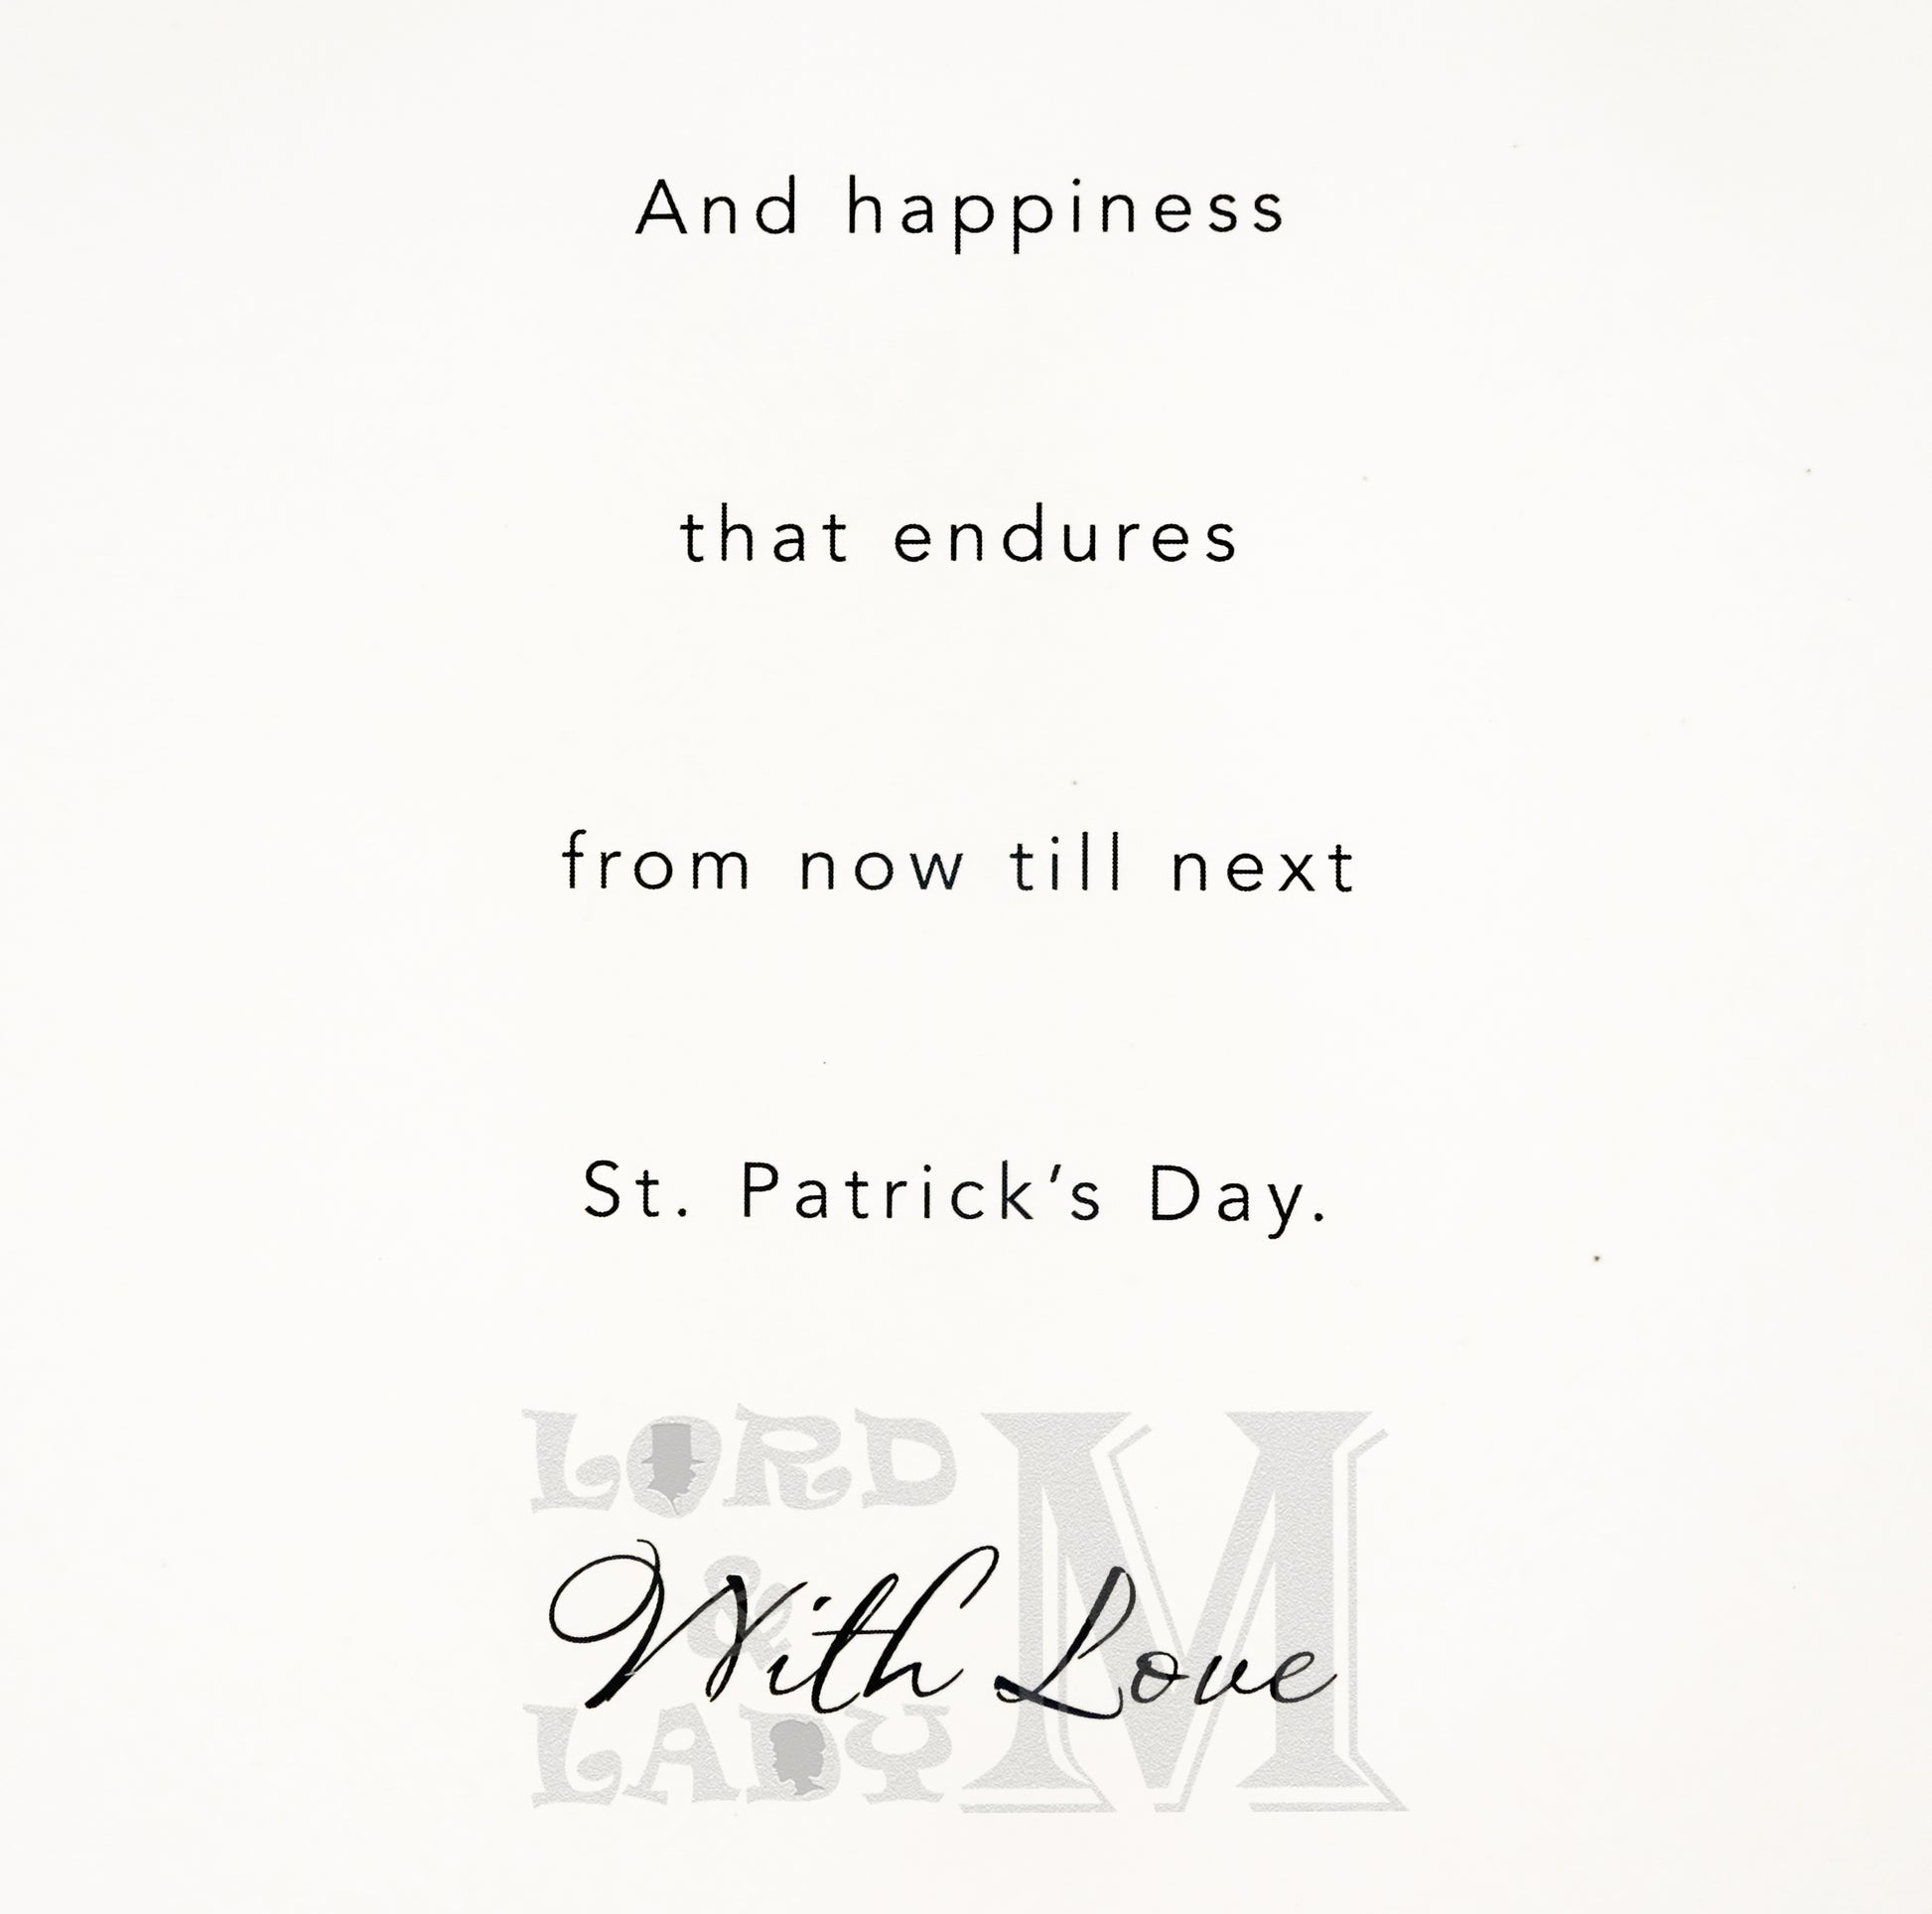 20cm - St. Patrick's Day Wishes Wishing You - BGC